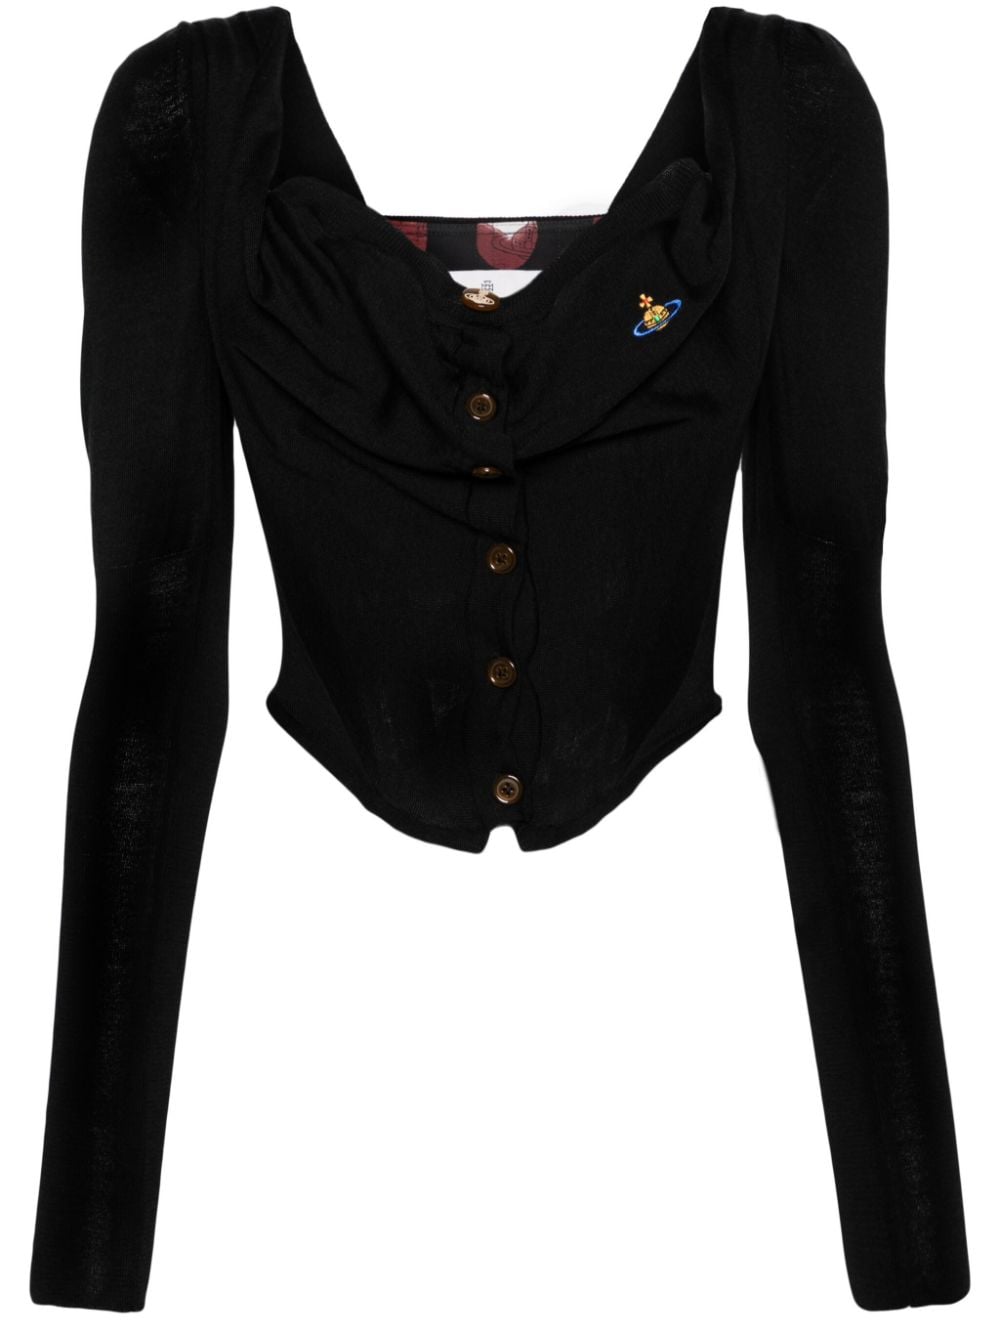 VIVIENNE WESTWOOD Black Wool-Silk Blend Fine Knit Corset: Sweetheart Neck, Draping Detail, Long Sleeves - Women's Fashion